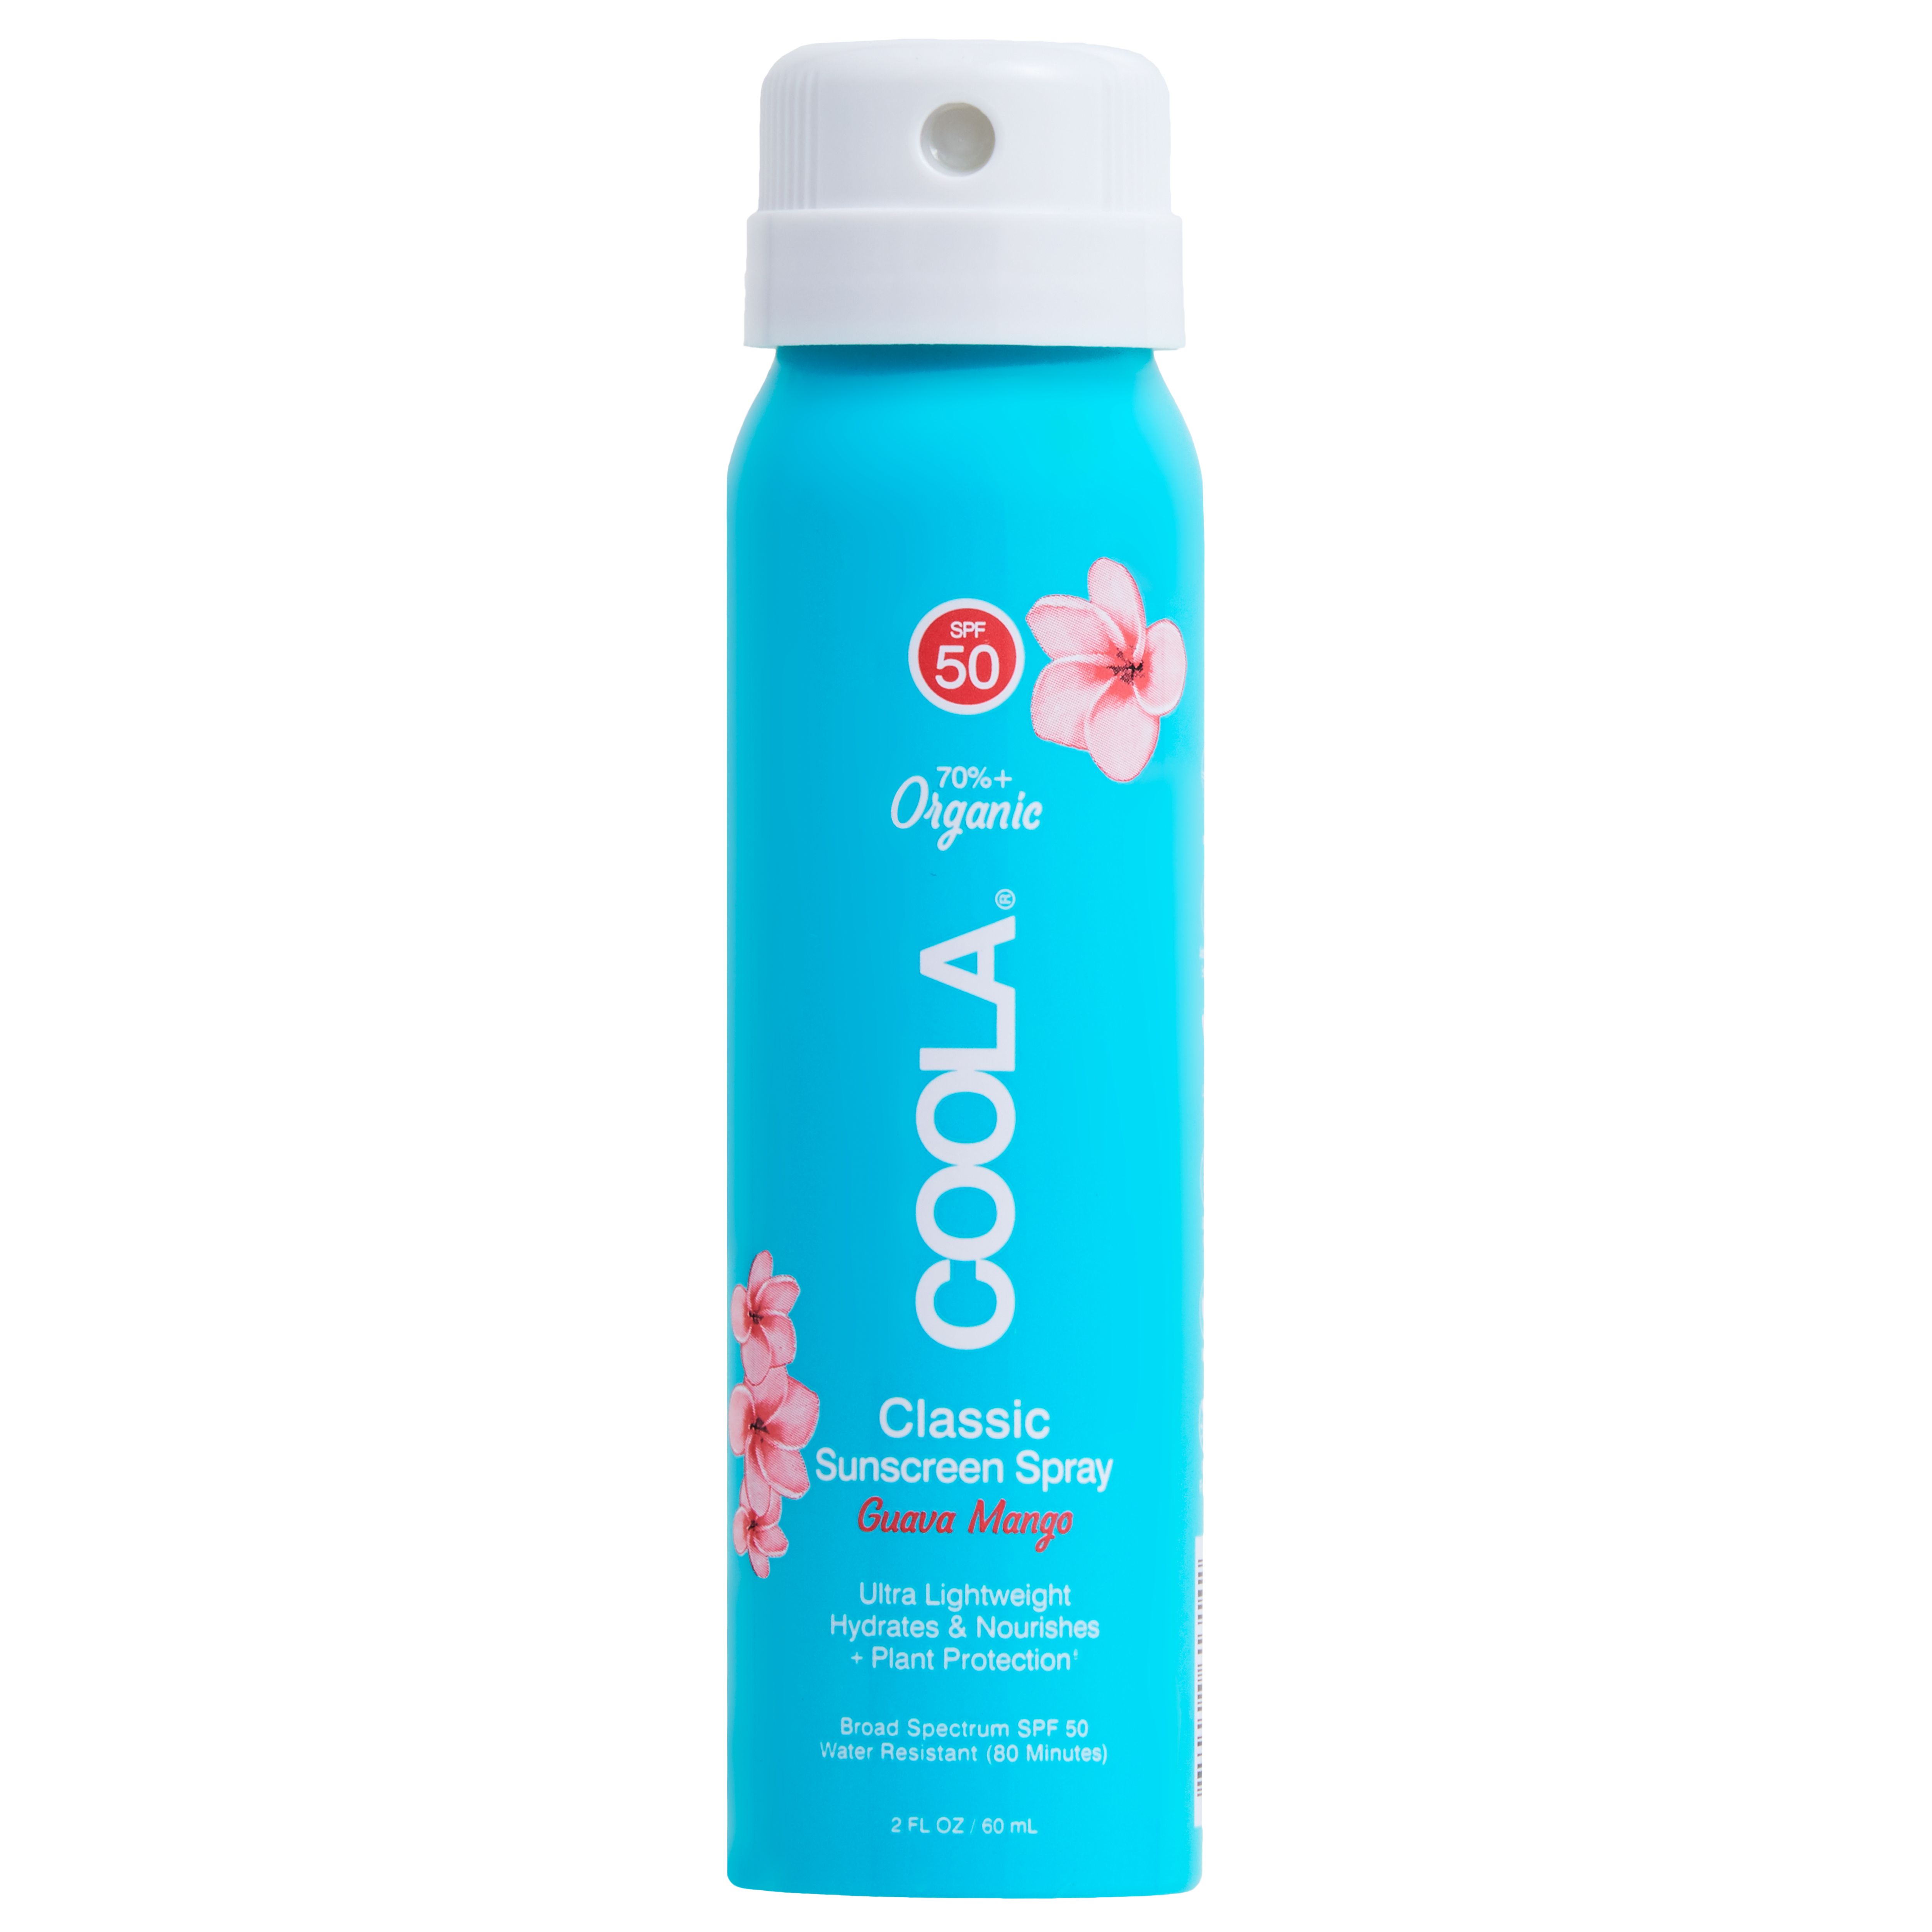 COOLA Travel Size Organic Sunscreen Spray, Guava Mango, SPF 50 - 2 fl oz